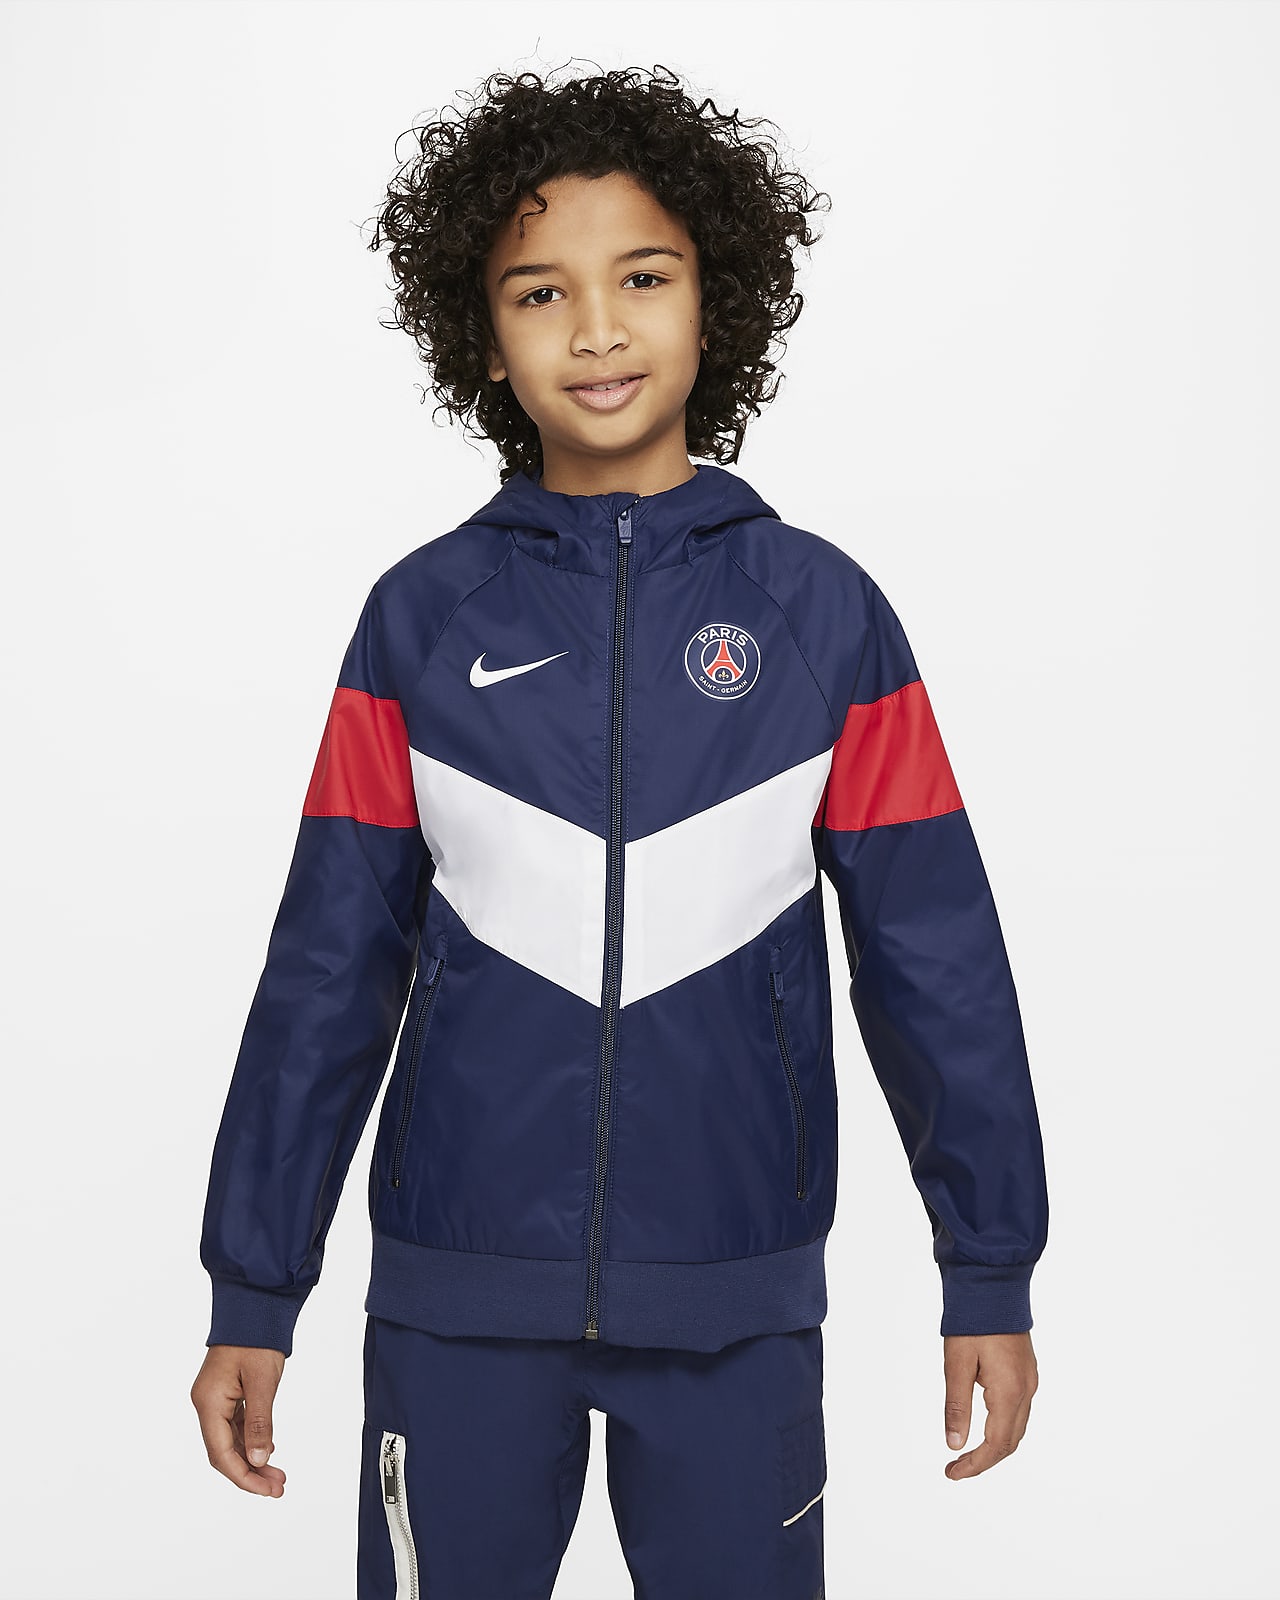 Paris Saint-Germain Kids' Nike.com